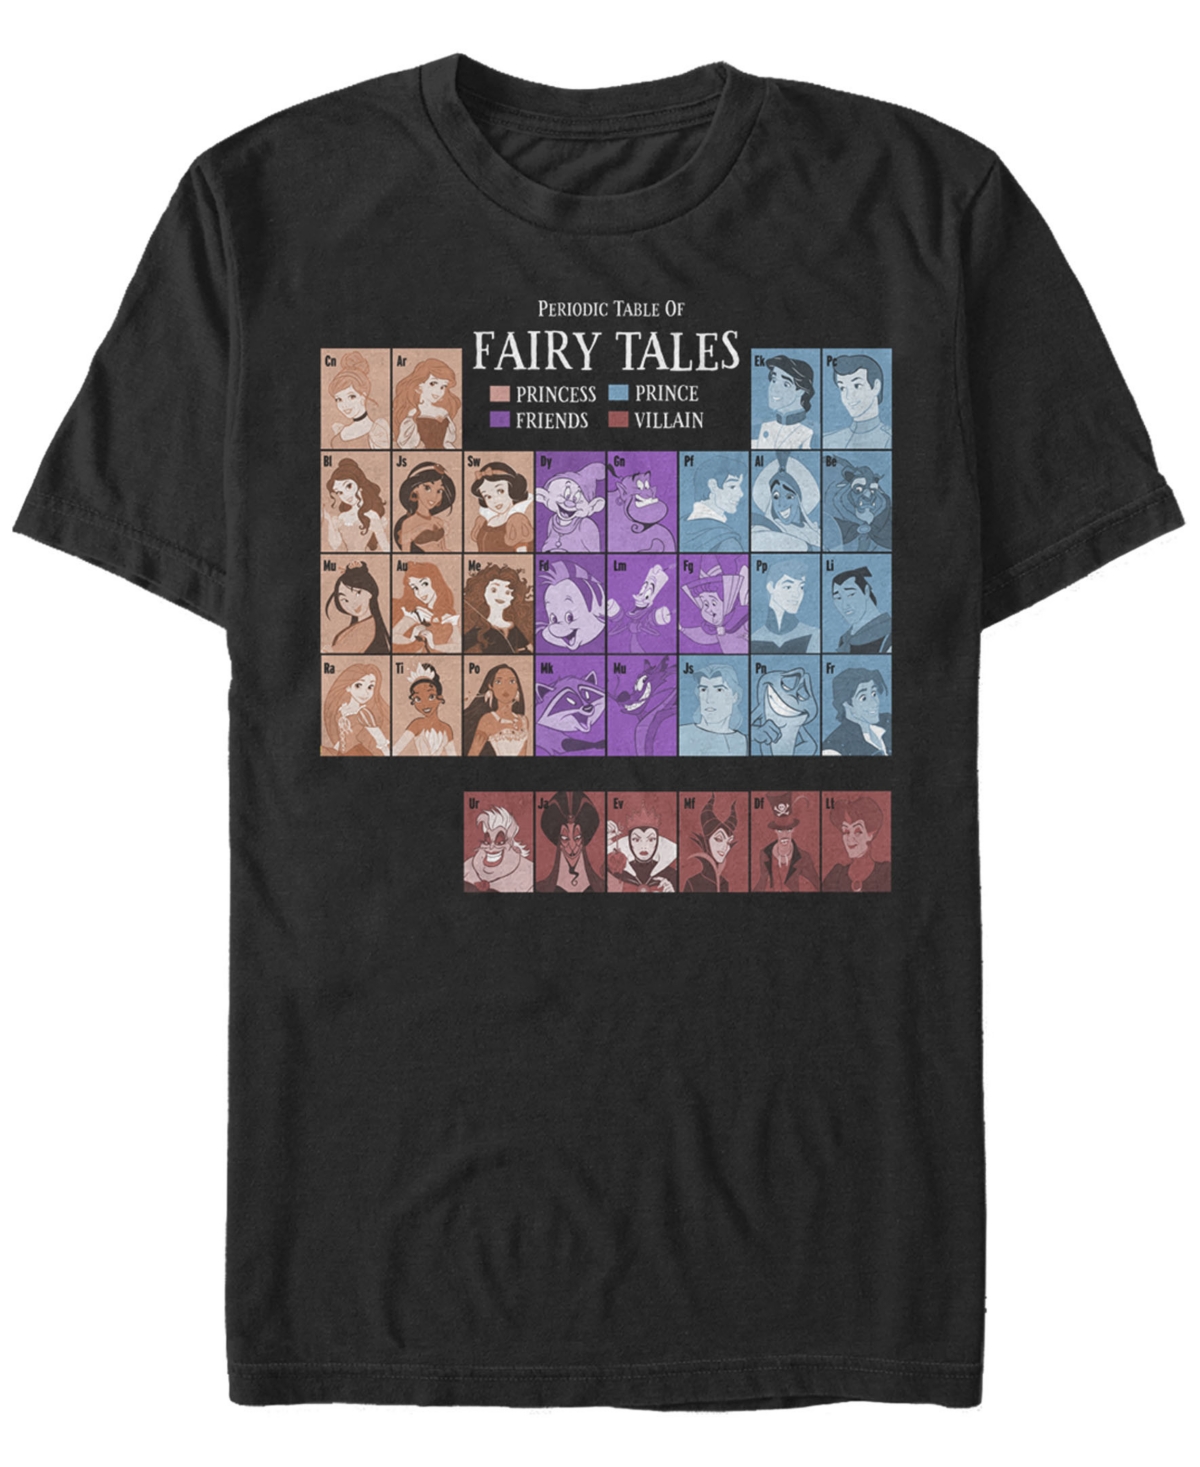 Fifth Sun Men's Princess Periodic Table of Fairy Tales Short Sleeve T- shirt